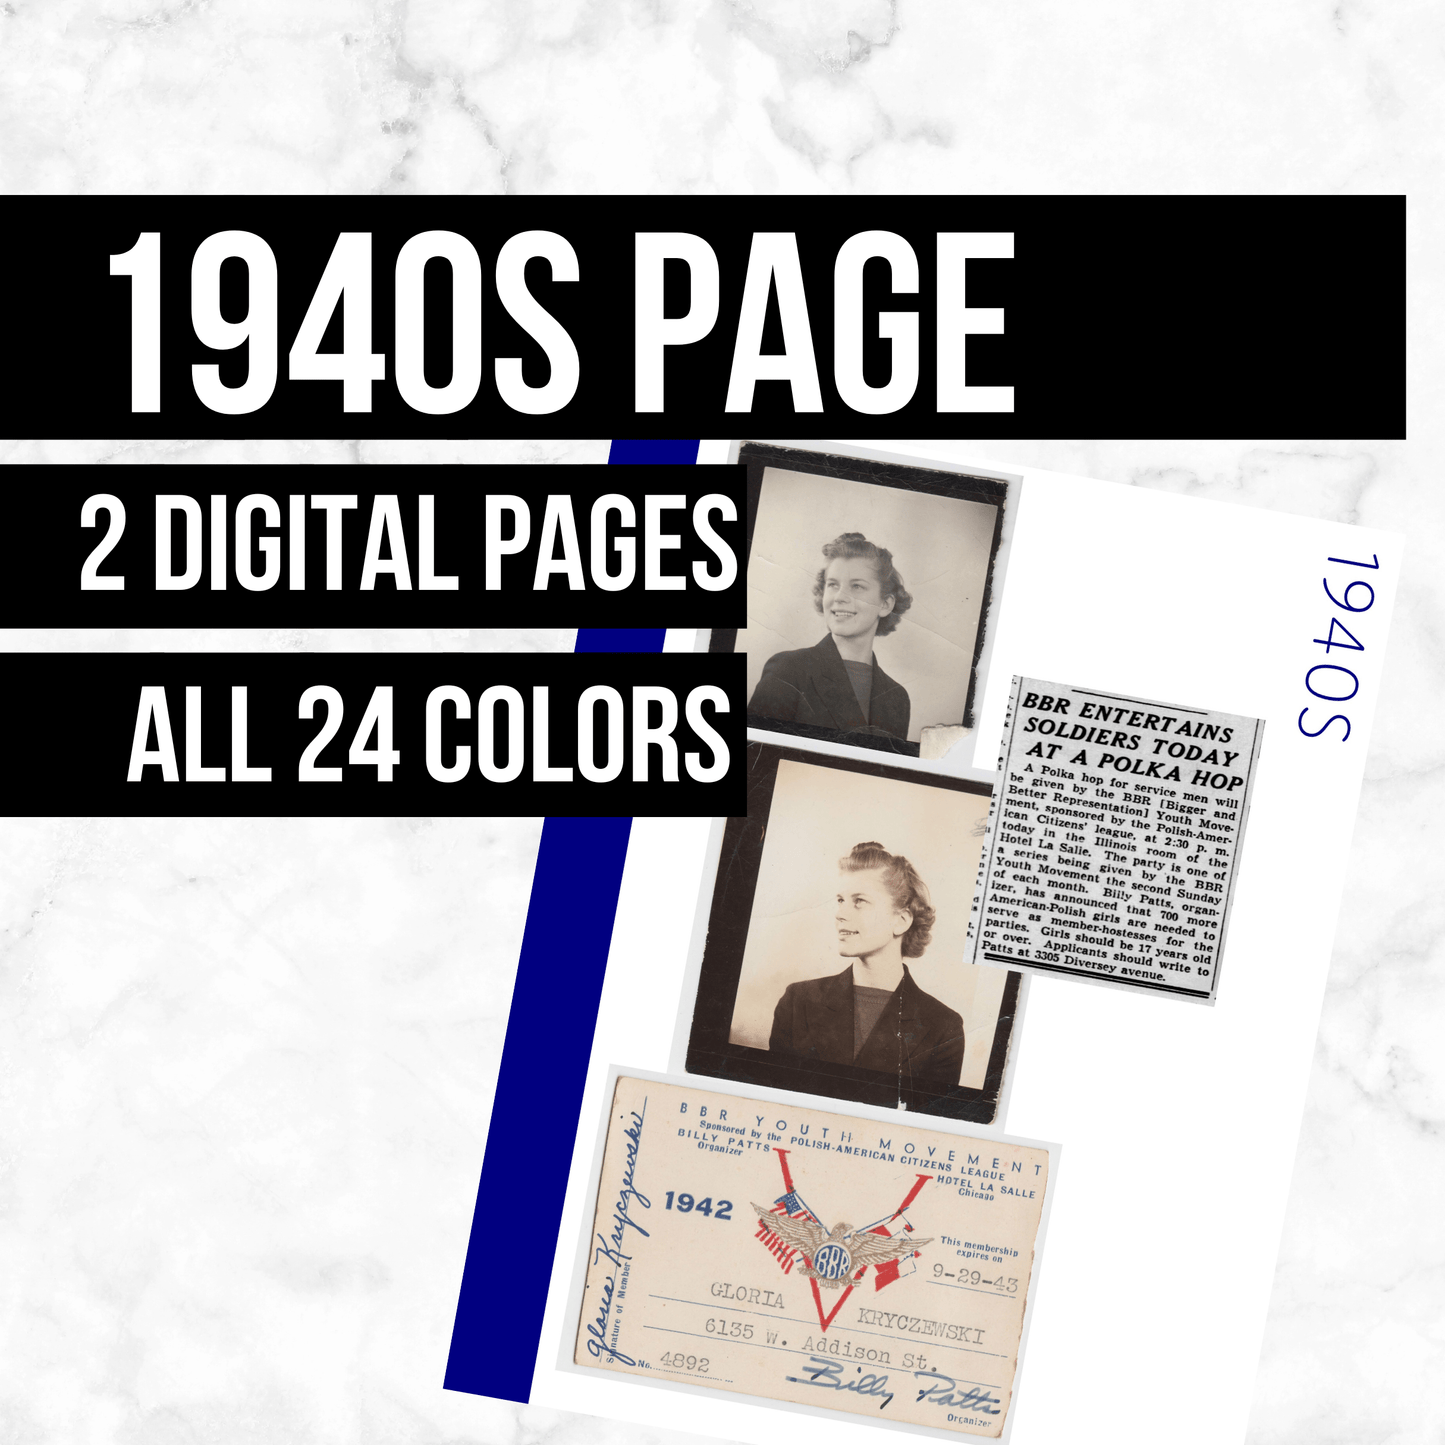 1940s Page: Printable Genealogy Form (Digital Download)